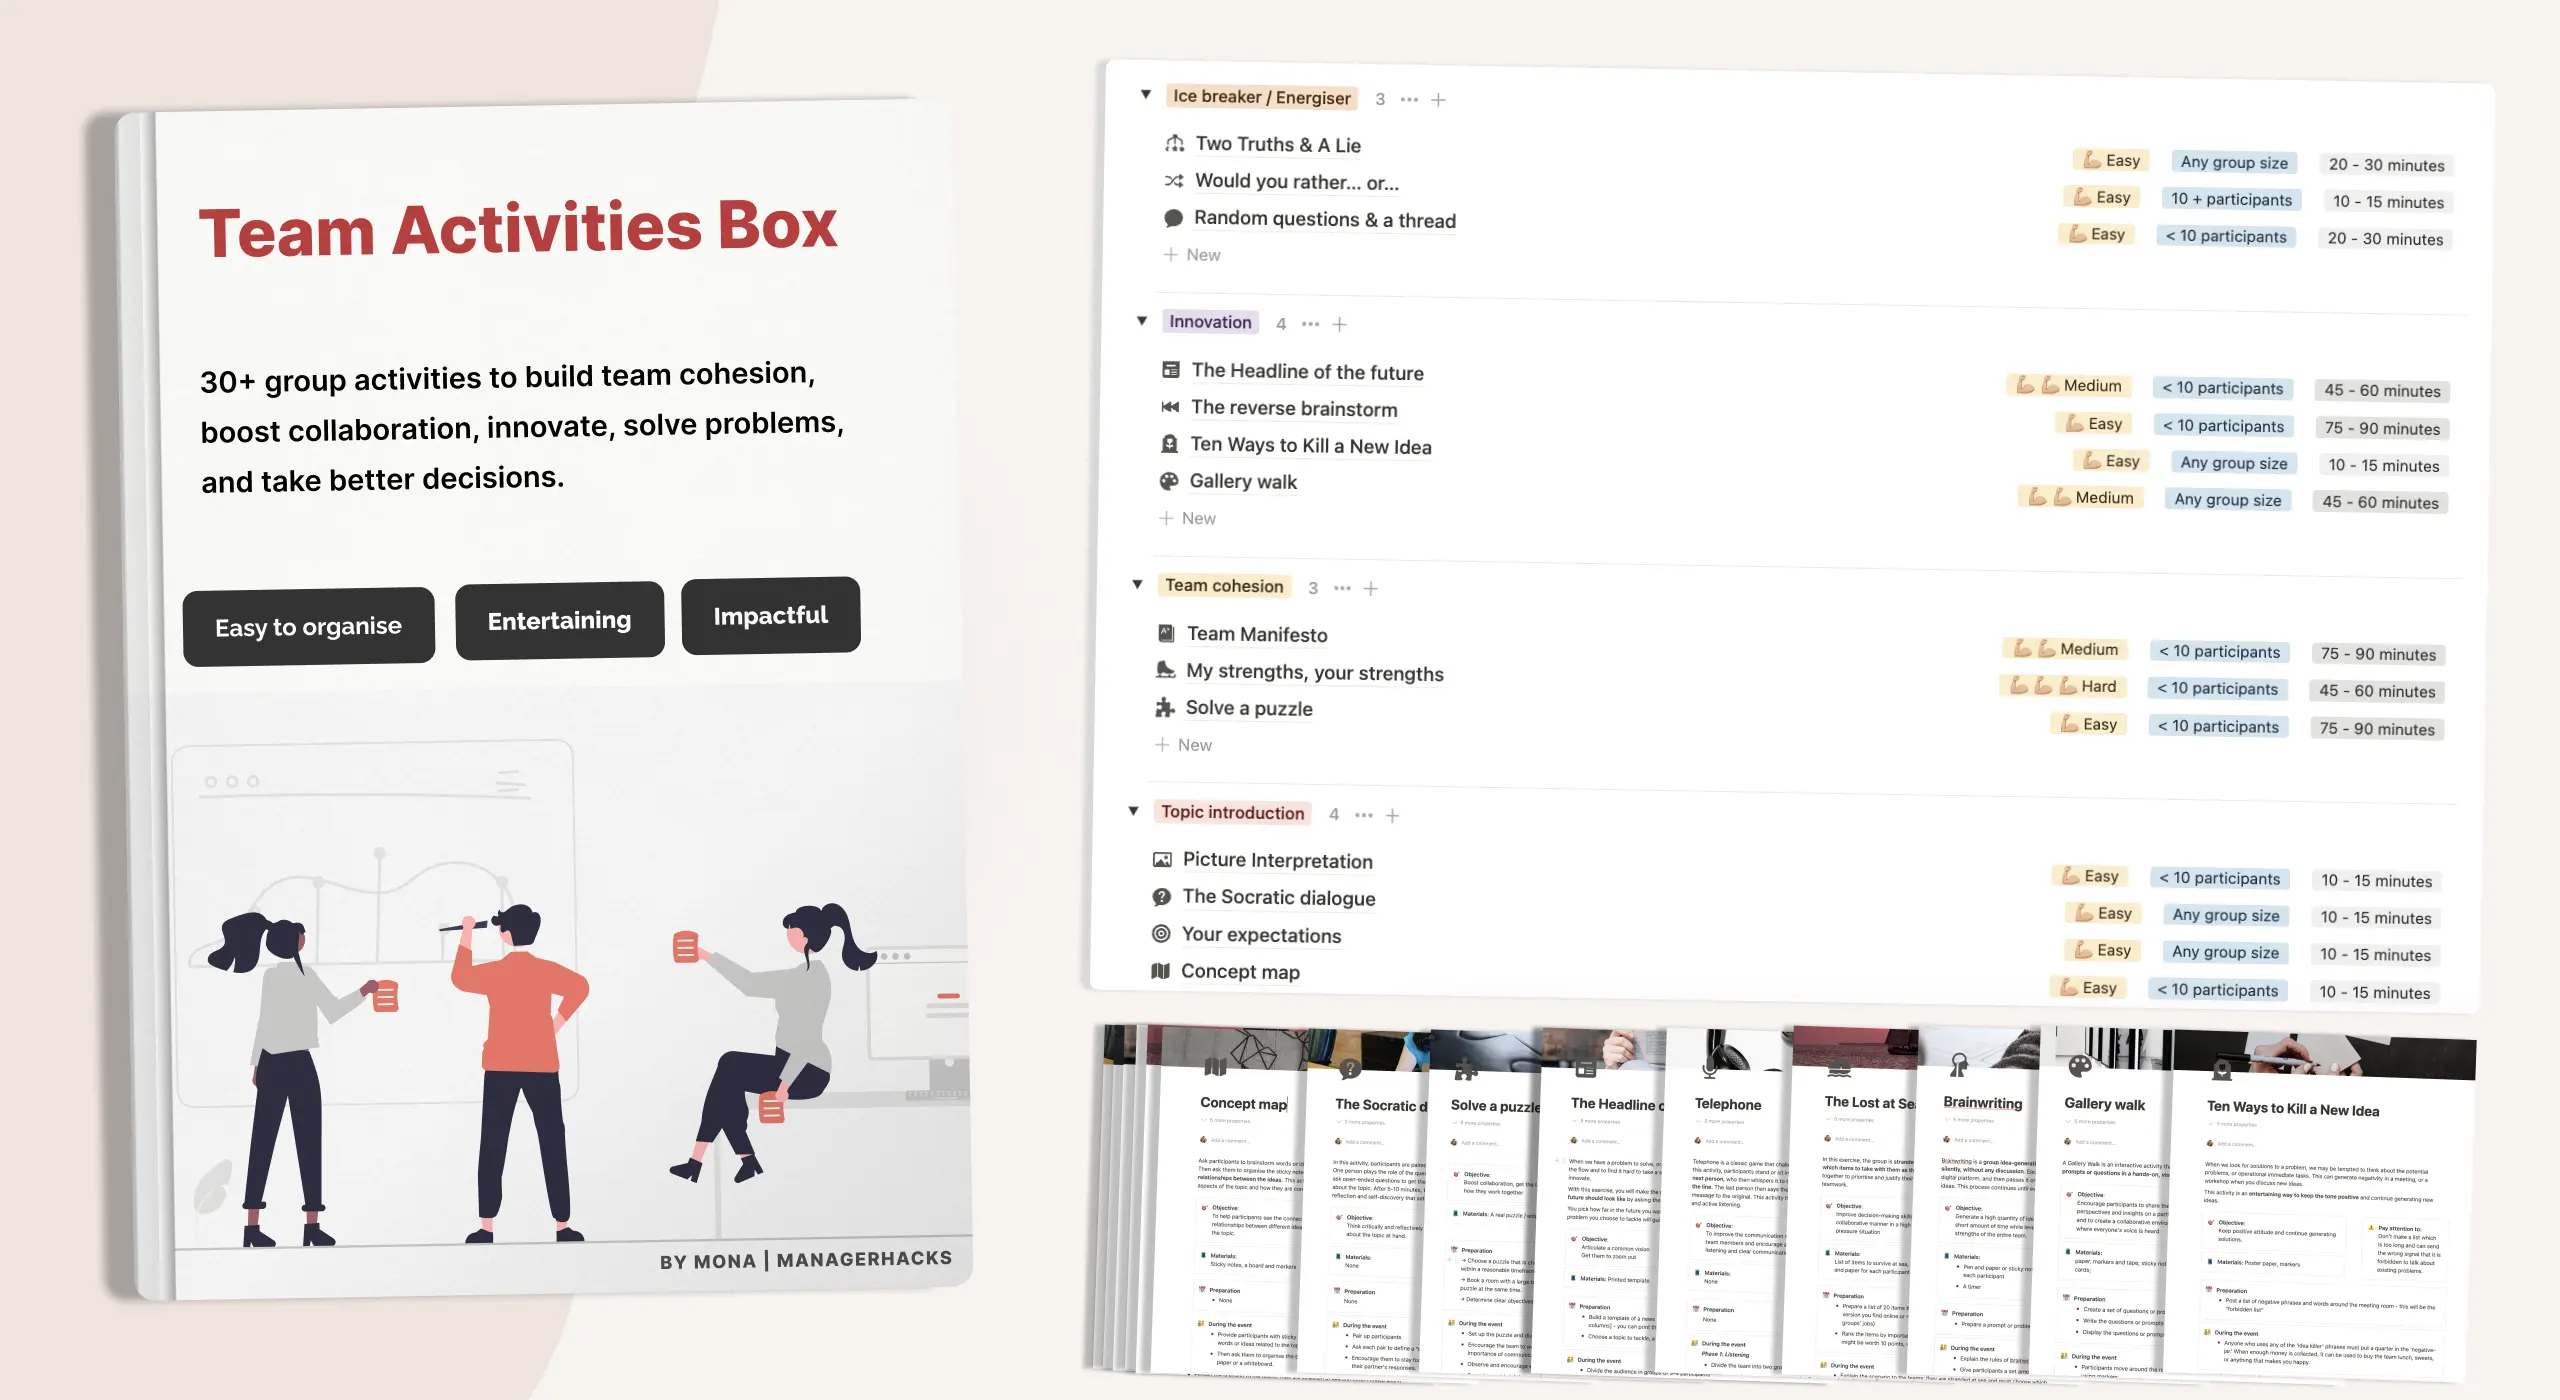 Team Activities Box image